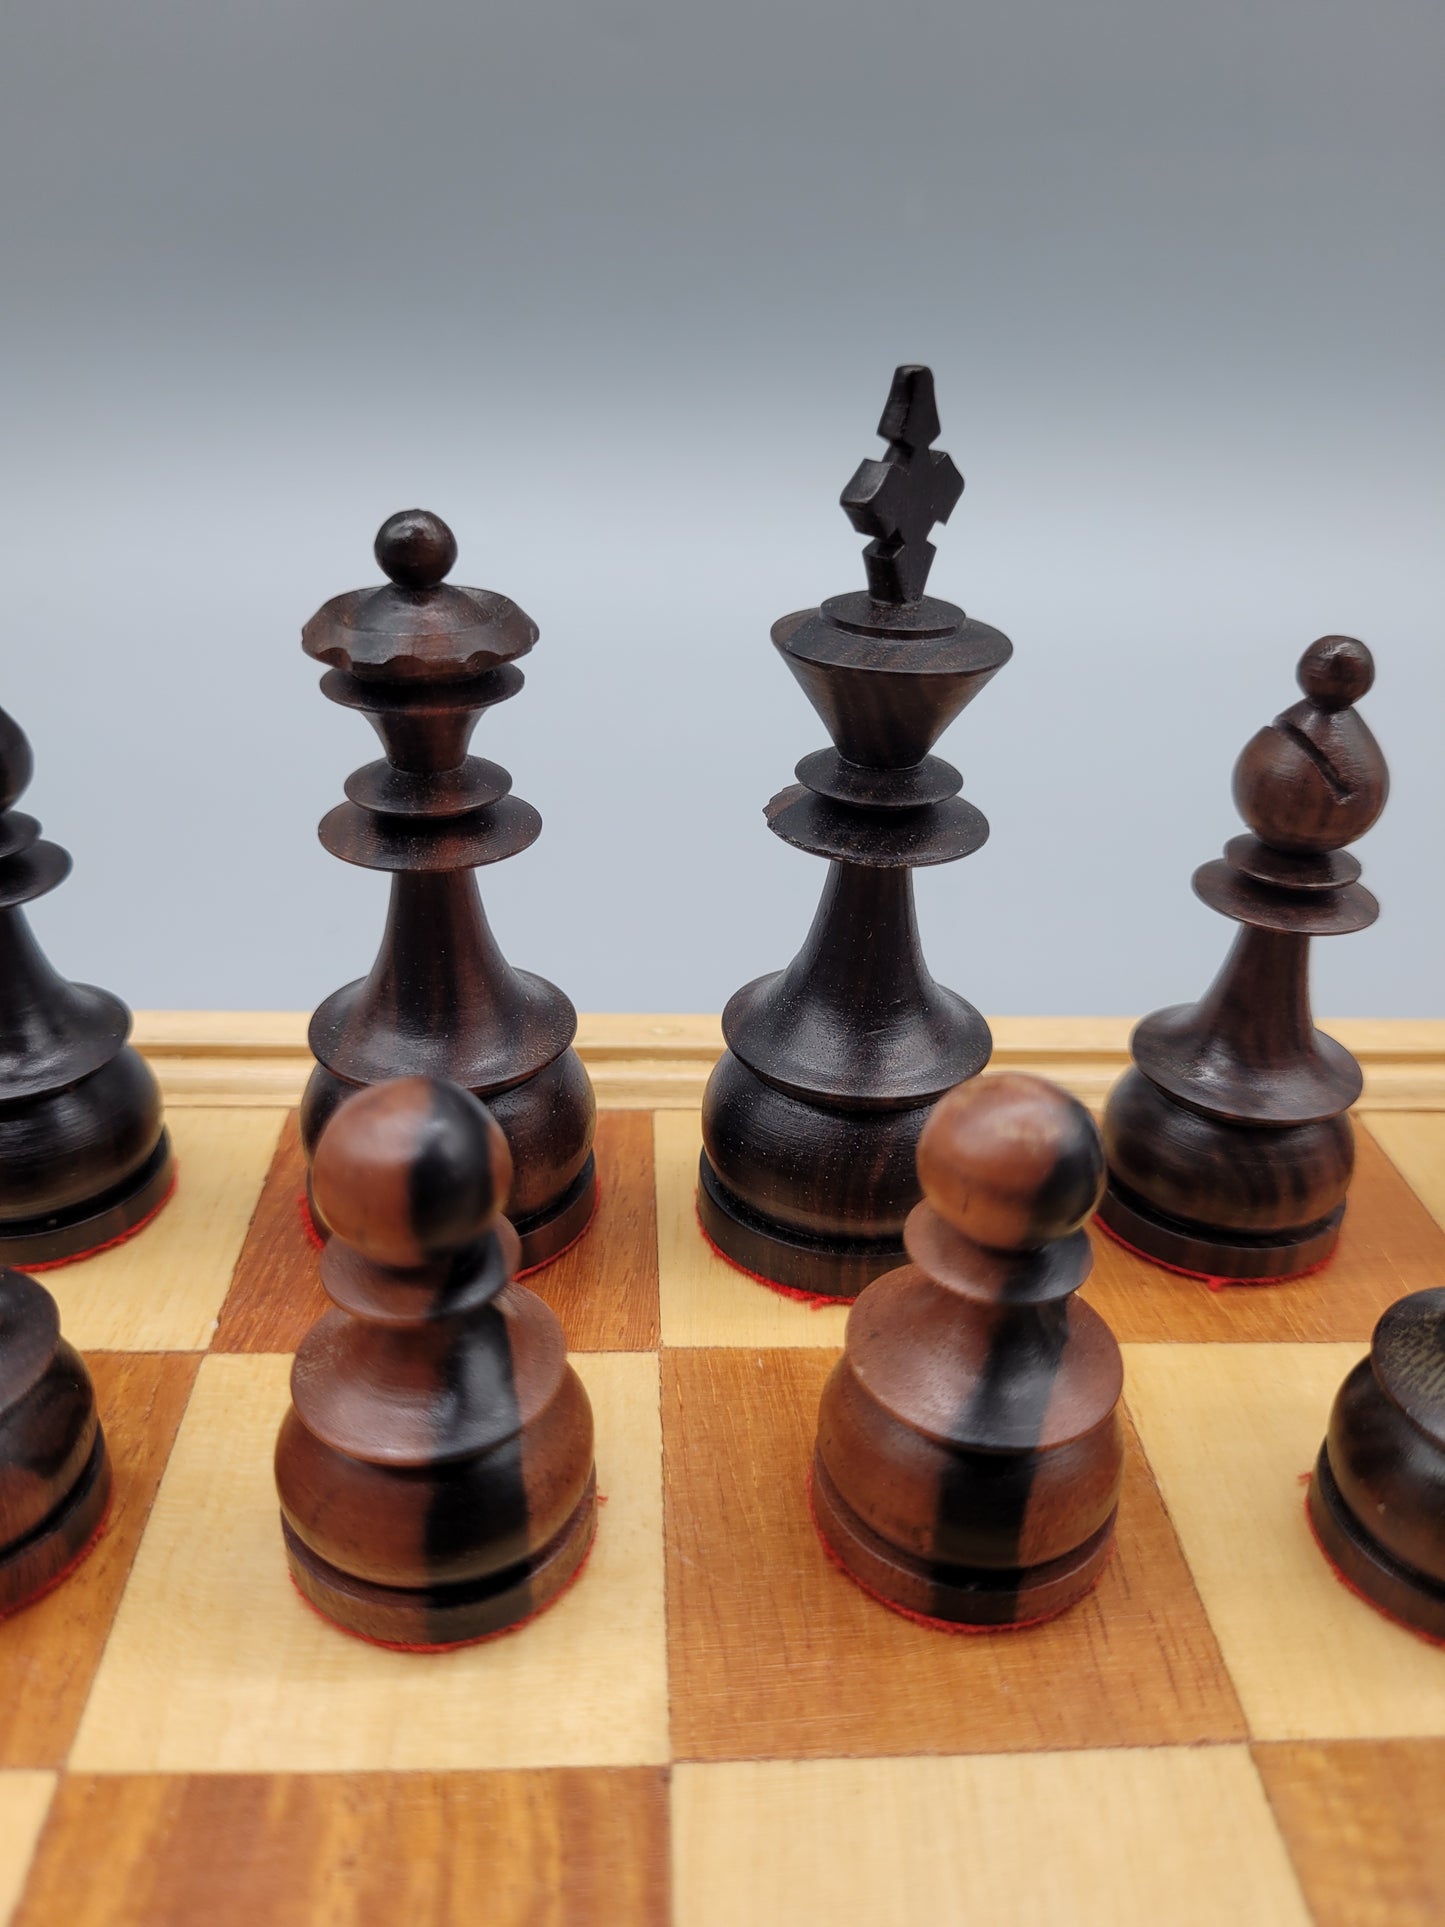 Klassisches Schachspiel, 32 Fein Handgeschnitzte Schachfiguren